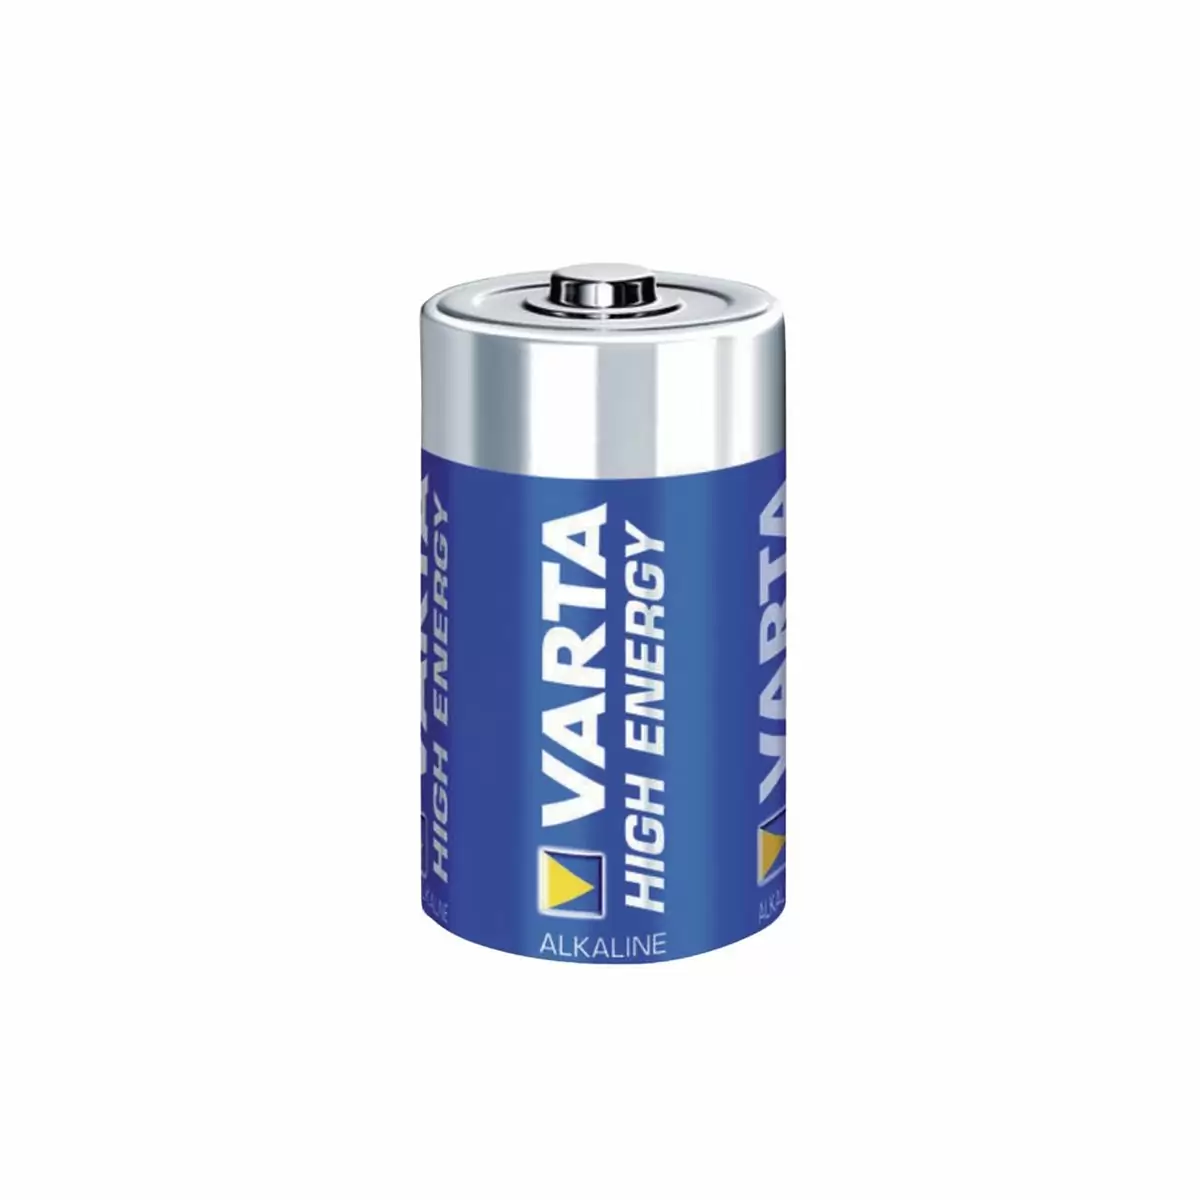 alkaline battery hugh energy lr14 - image